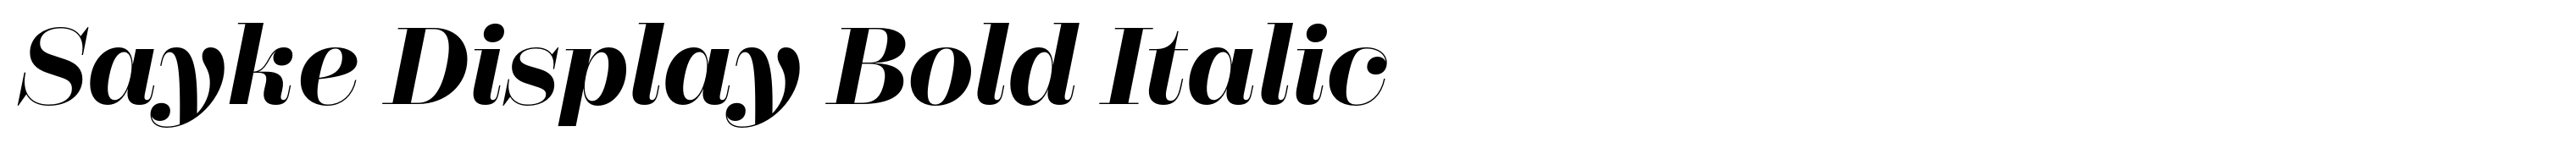 Sayke Display Bold Italic